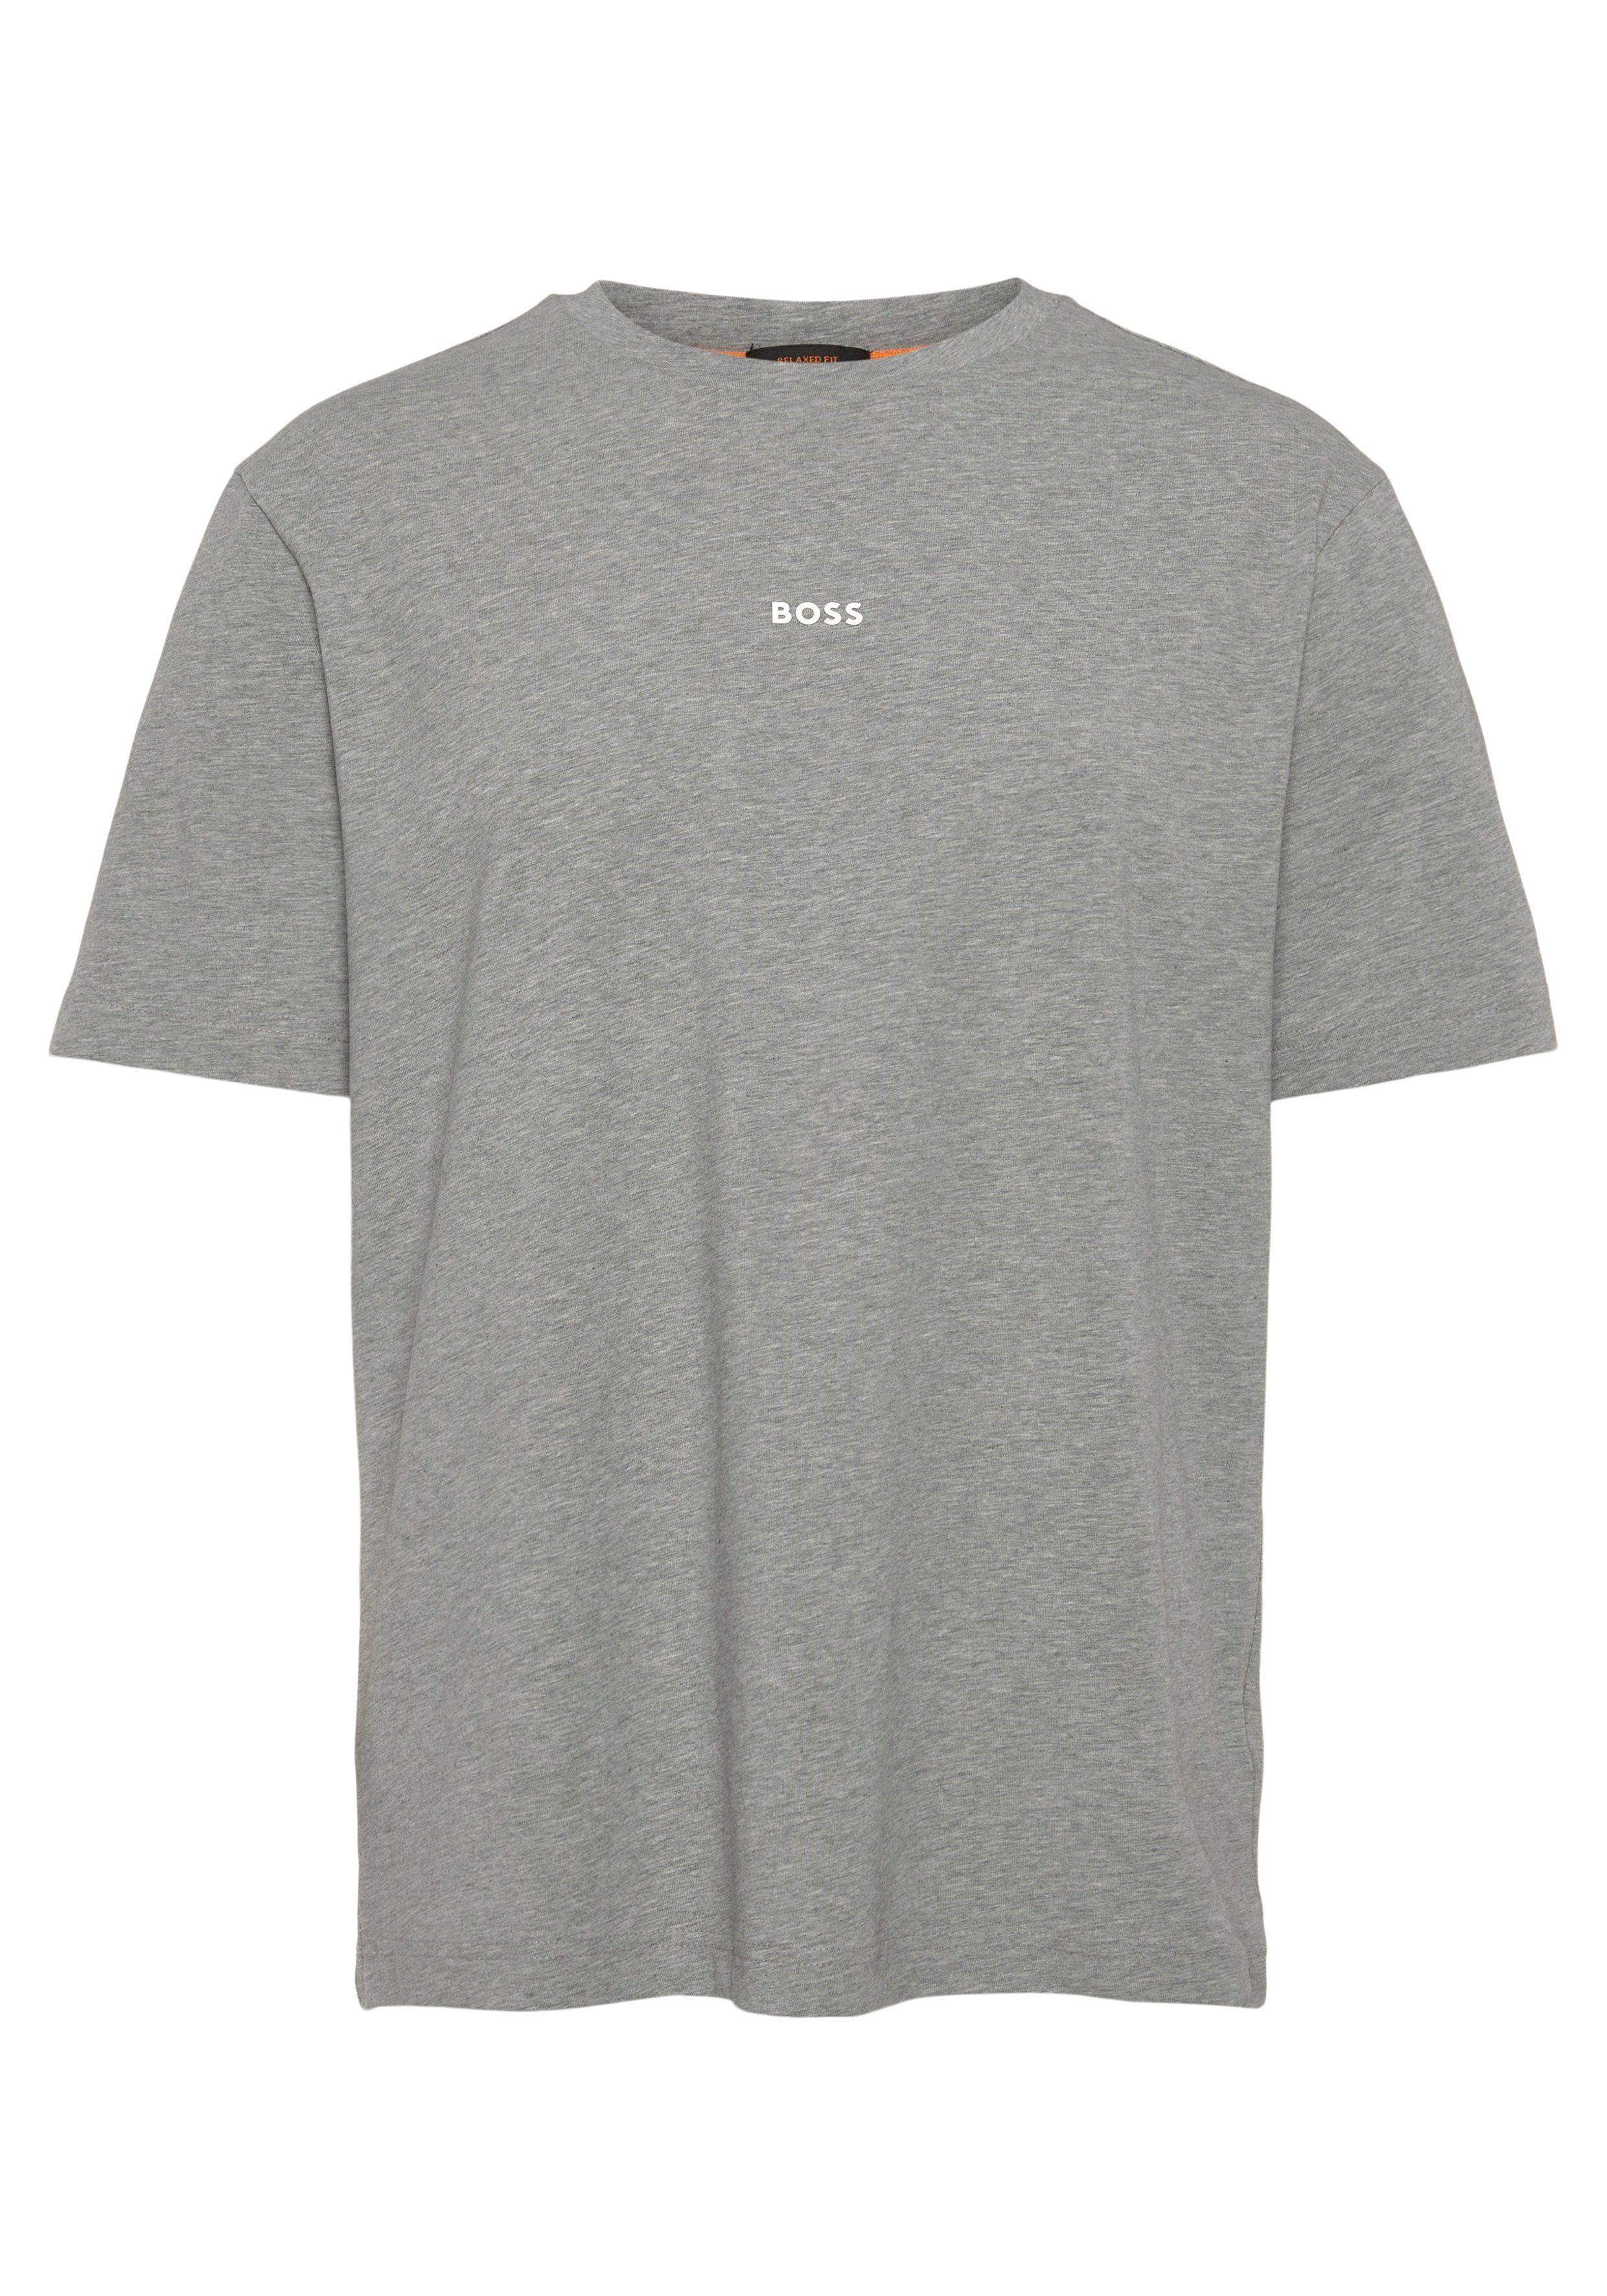 BOSS ORANGE Light/Pastel T-Shirt mit Grey TChup Rundhalsausschnitt 051